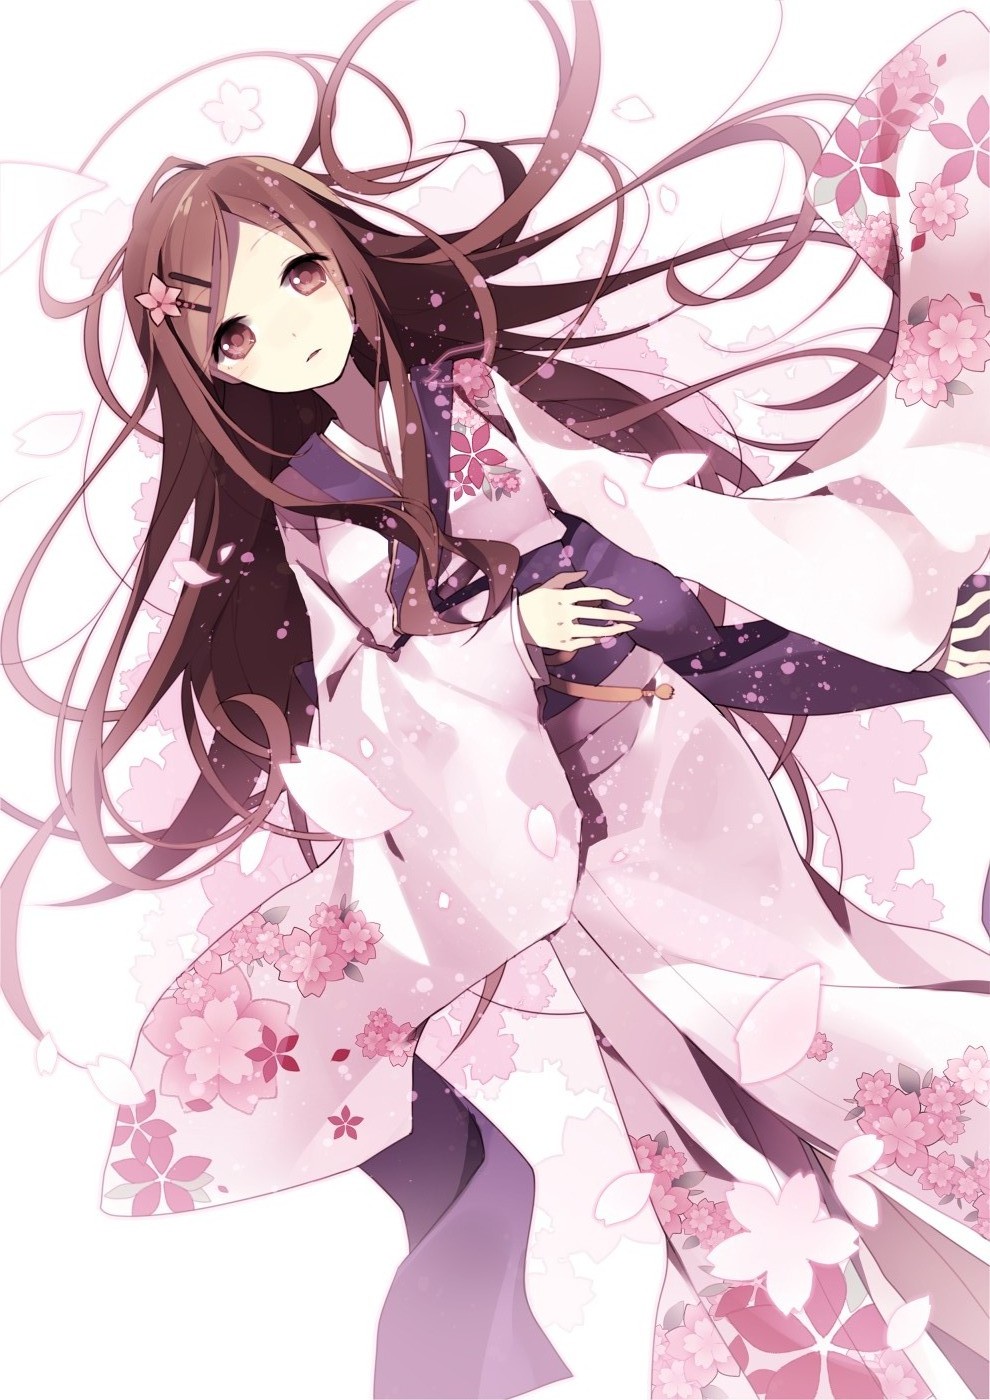 sakura*关雪樱&和服少女的长发铺在地上,散落着点点樱花花瓣